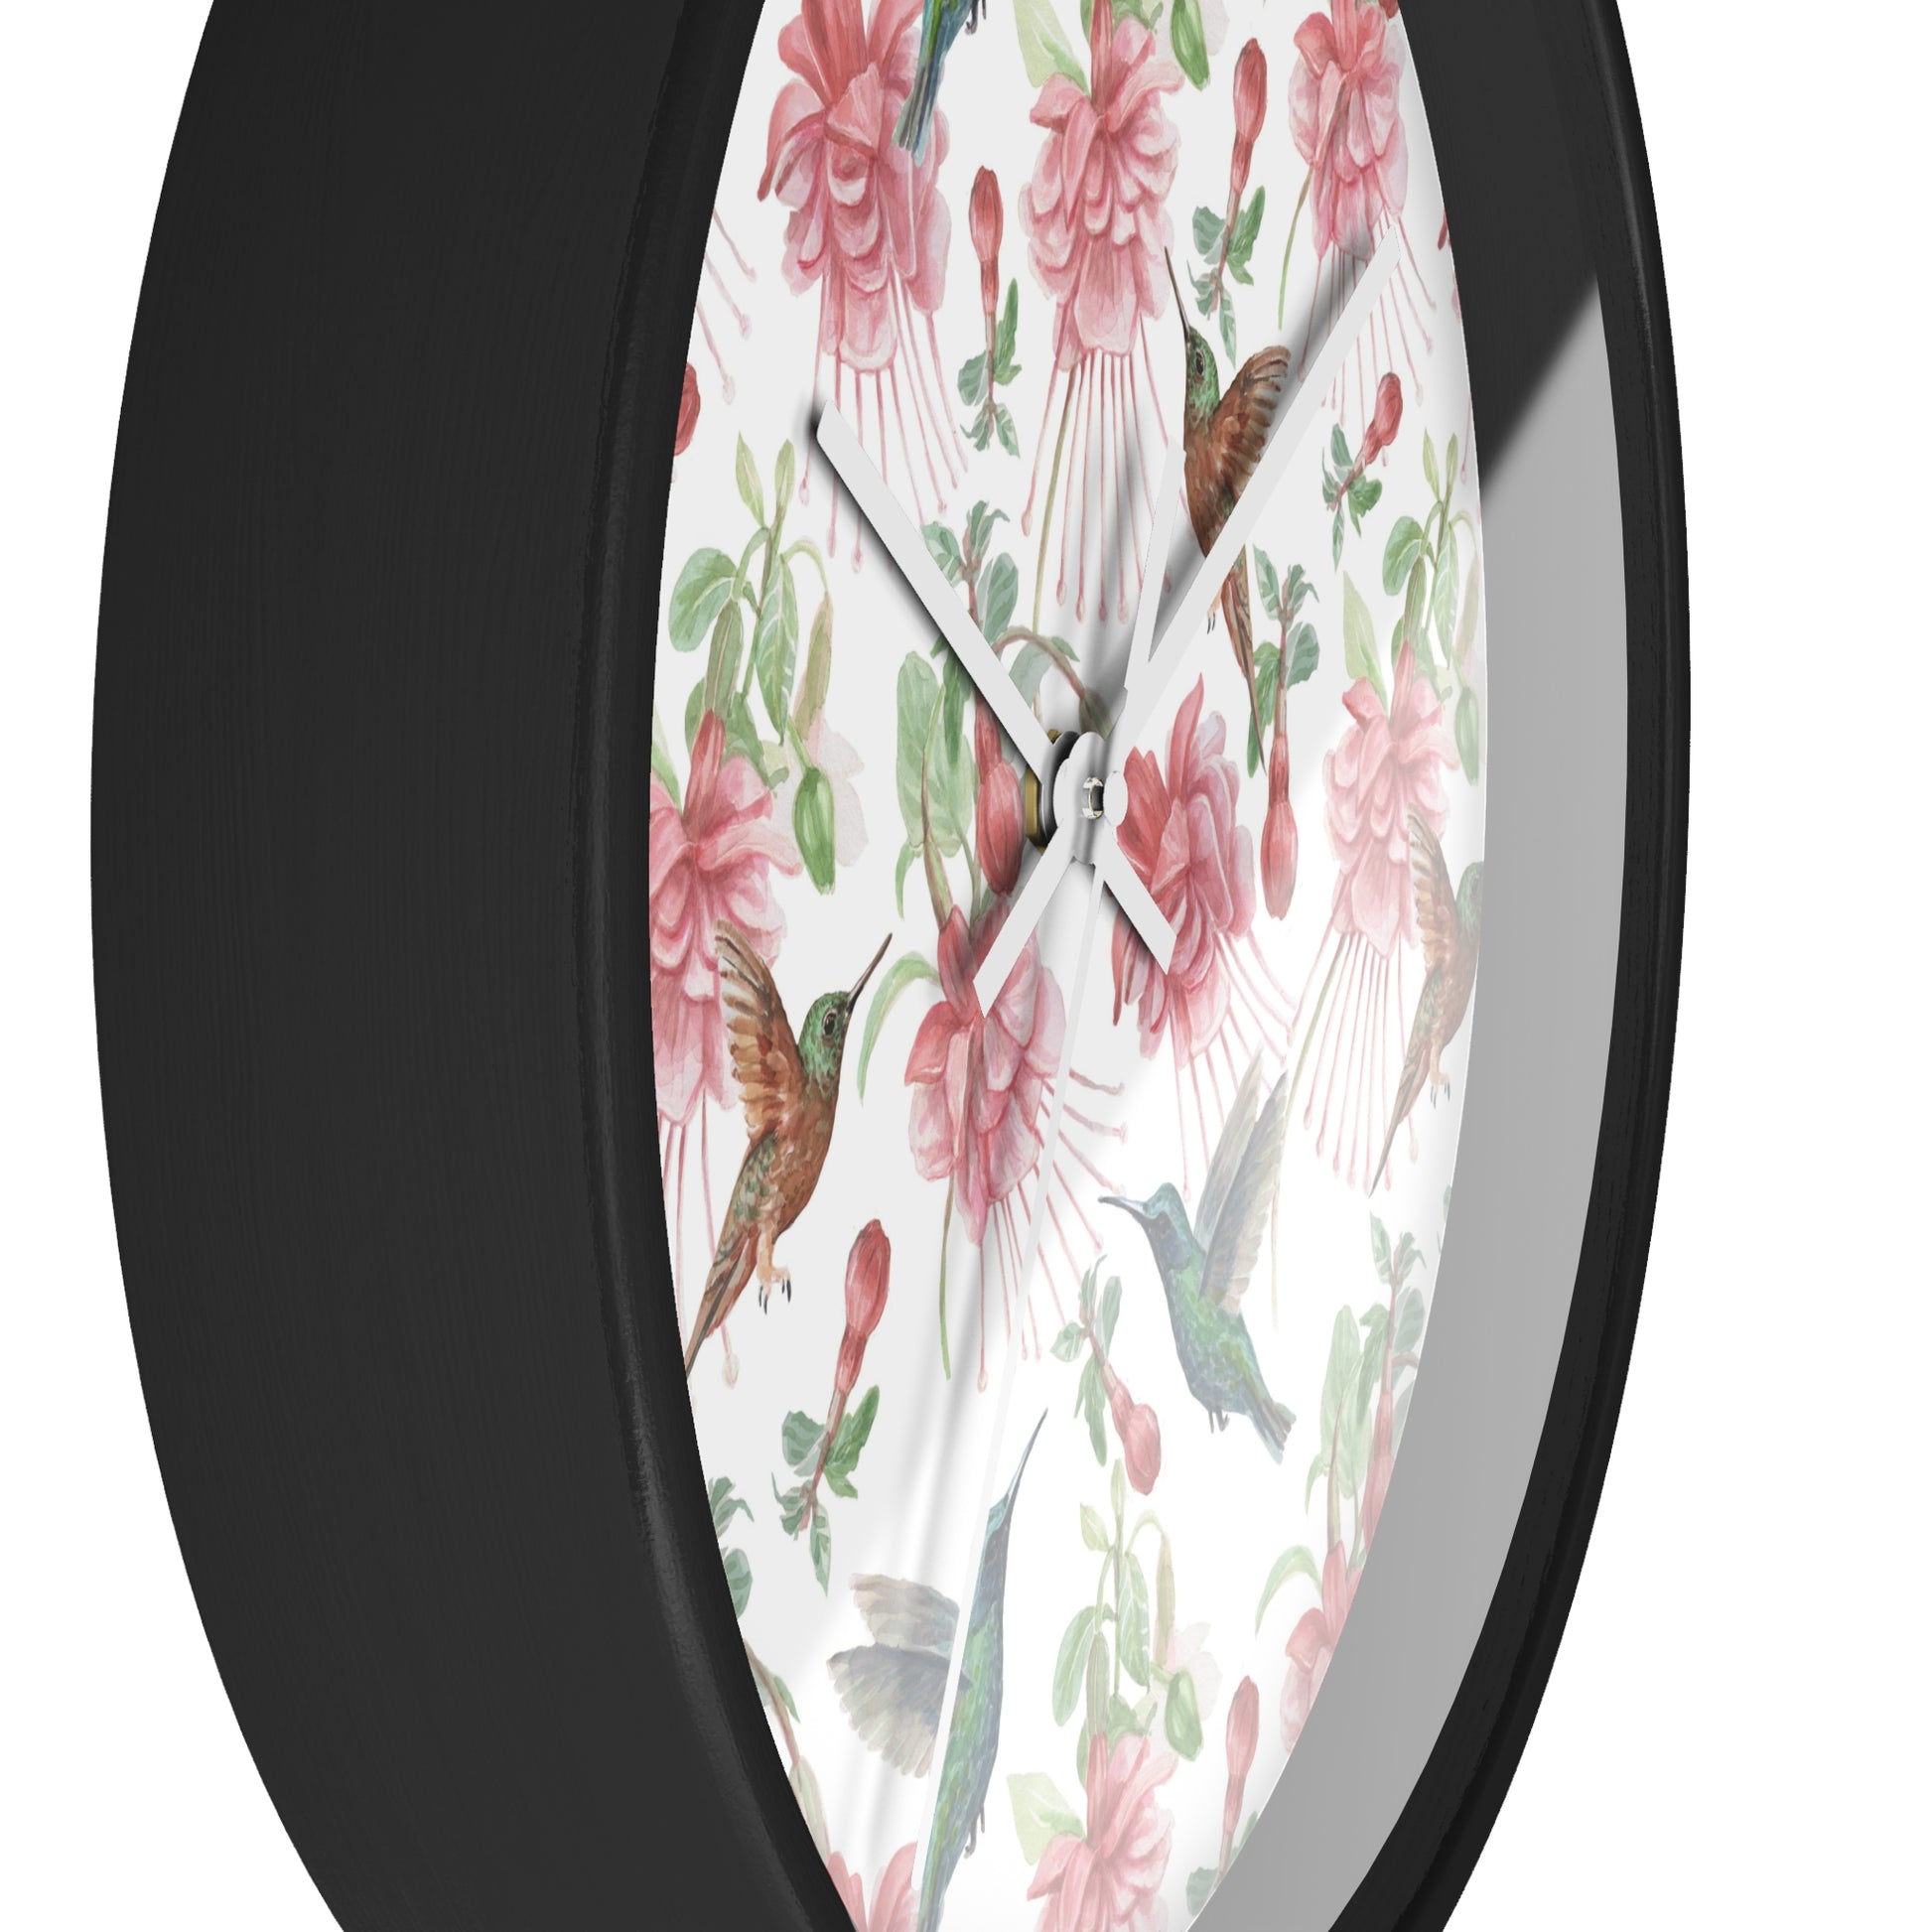 Hummingbird and Fuchsia Time Wall Clock - Expressive DeZien 